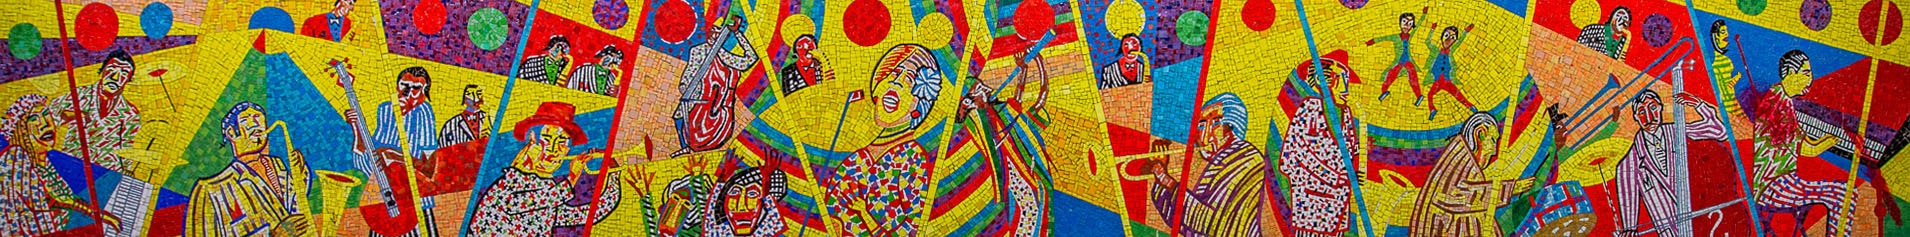 detail of Vincent Smith mosaic artwork at NYCT 116 Street